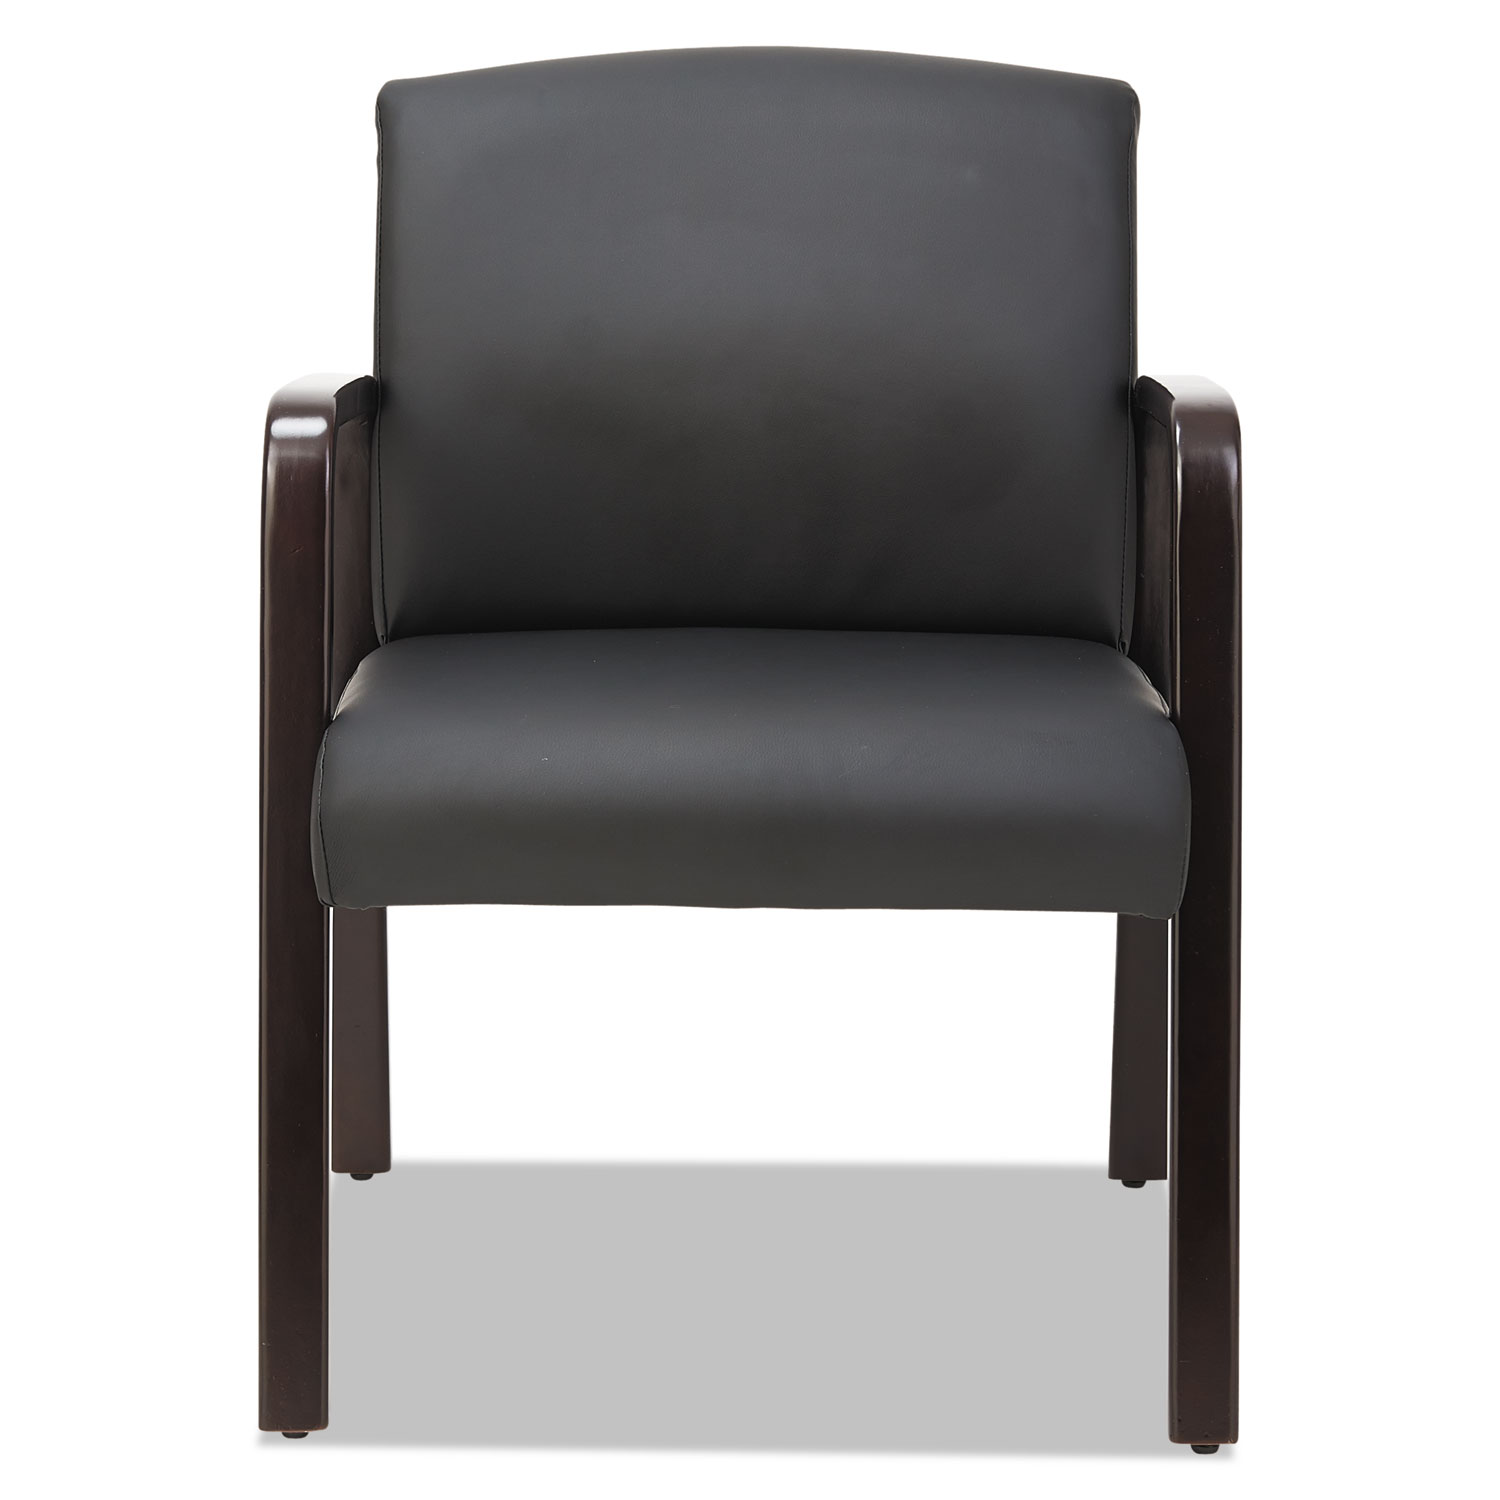 Alera Reception Lounge Series Guest Chair, Espresso/Black Leather